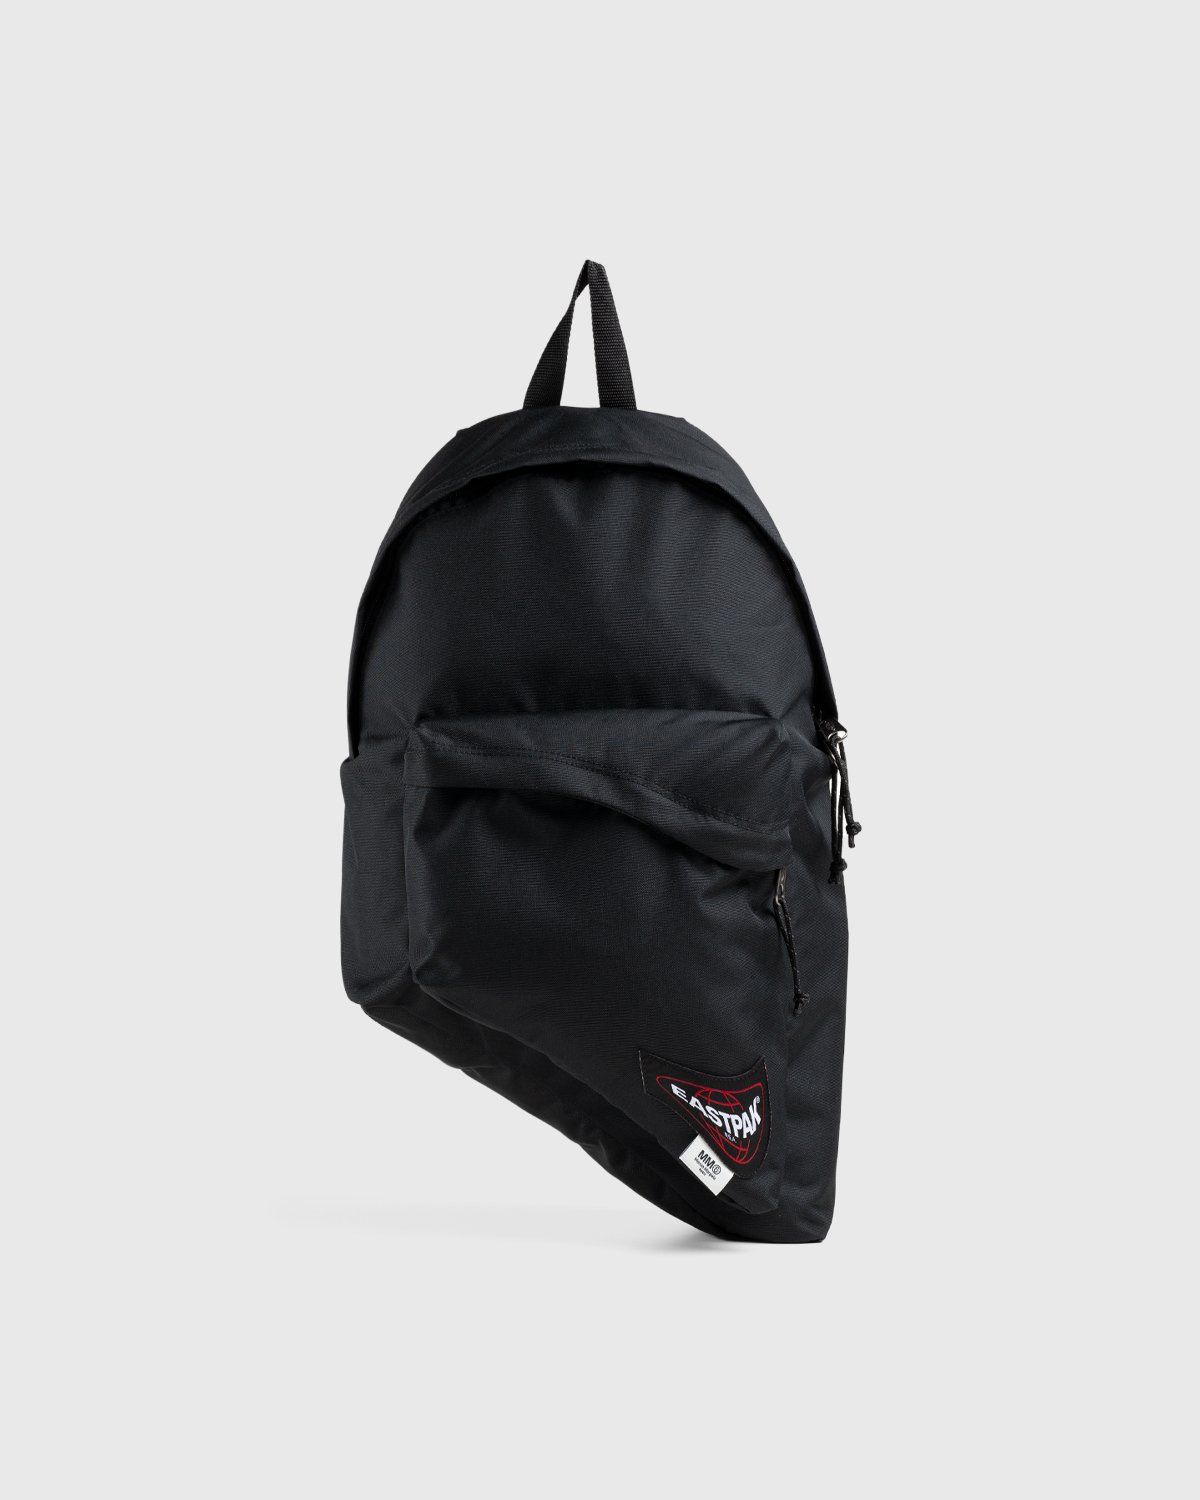 MM6 Maison Margiela x Eastpak - Zaino Backpack Black - Accessories - Black - Image 1